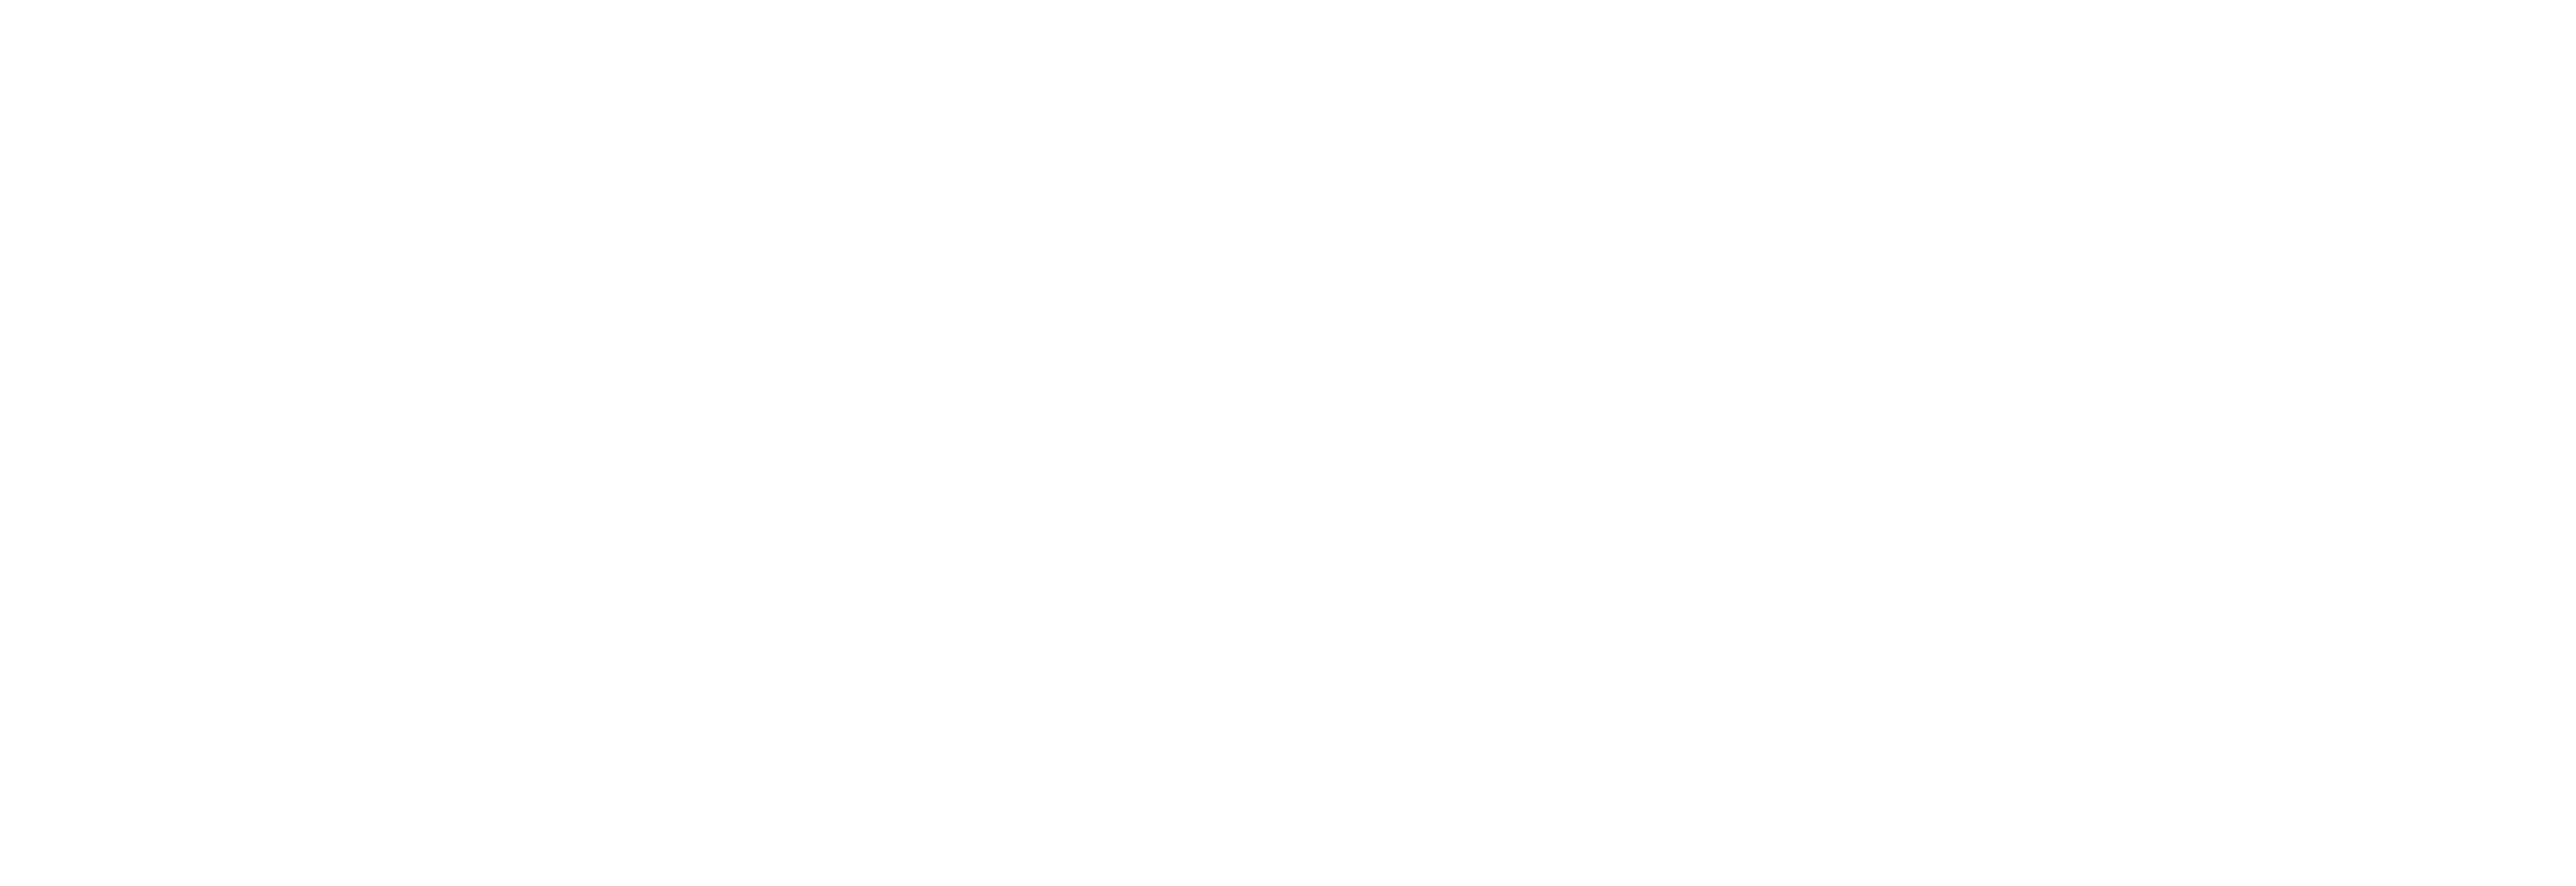 staffd-logo-white